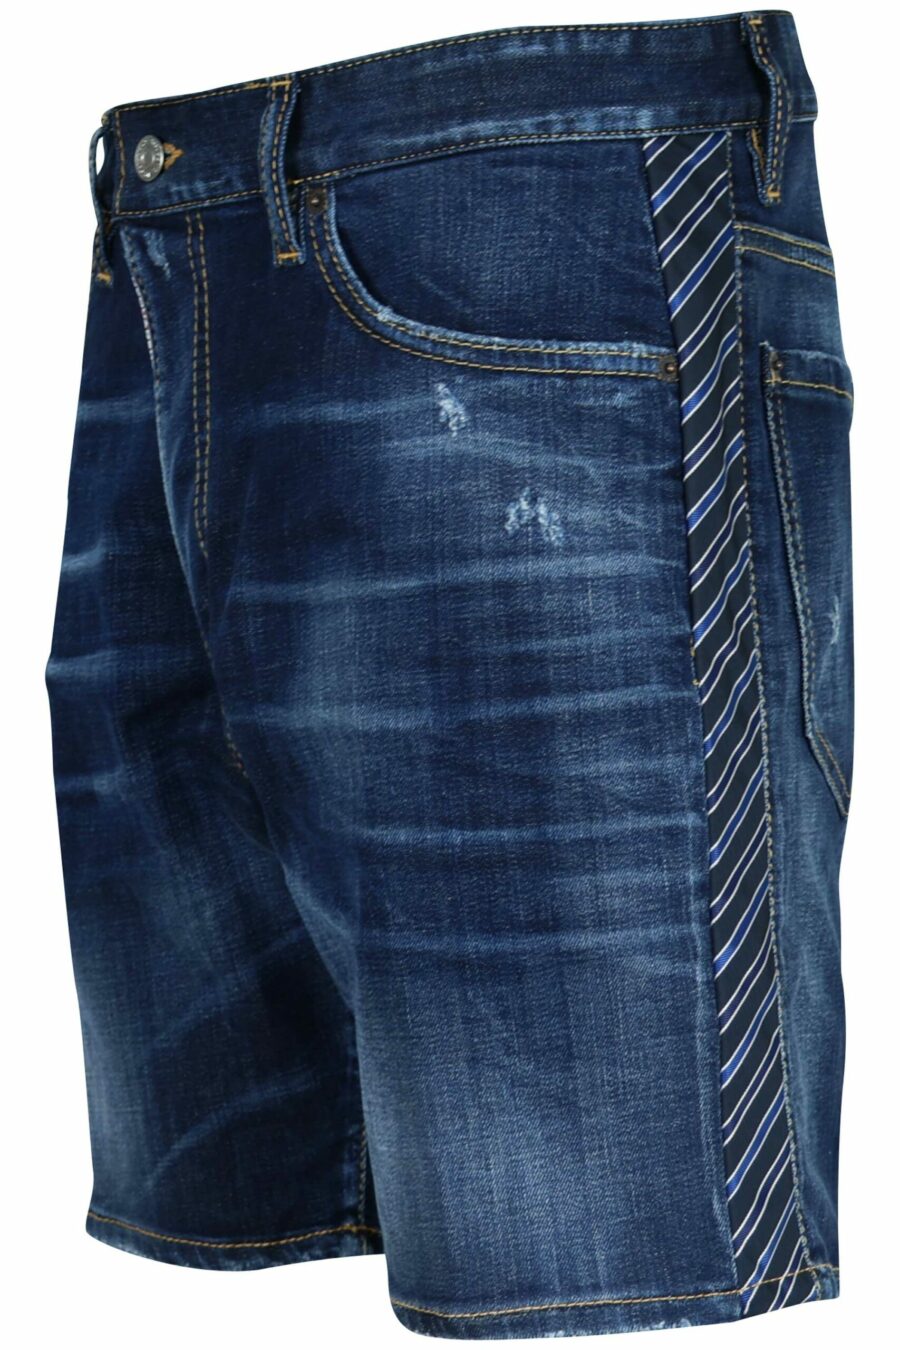 Blue denim shorts "marine short" - 8054148477691 1 scaled